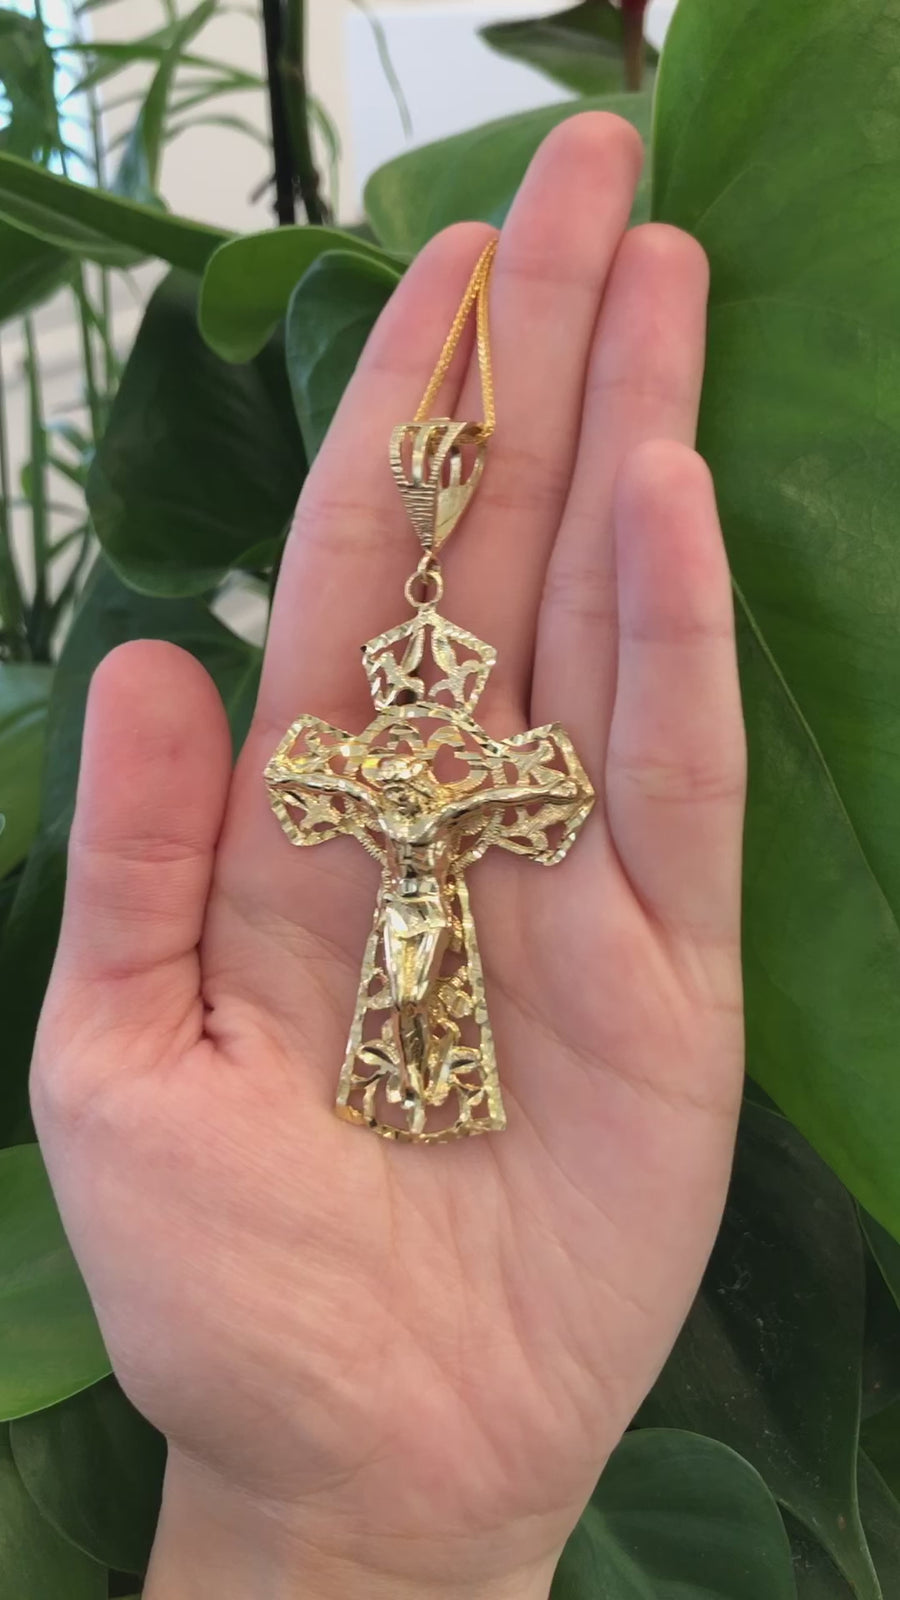 14k Yellow Gold Cross Pendant Necklace